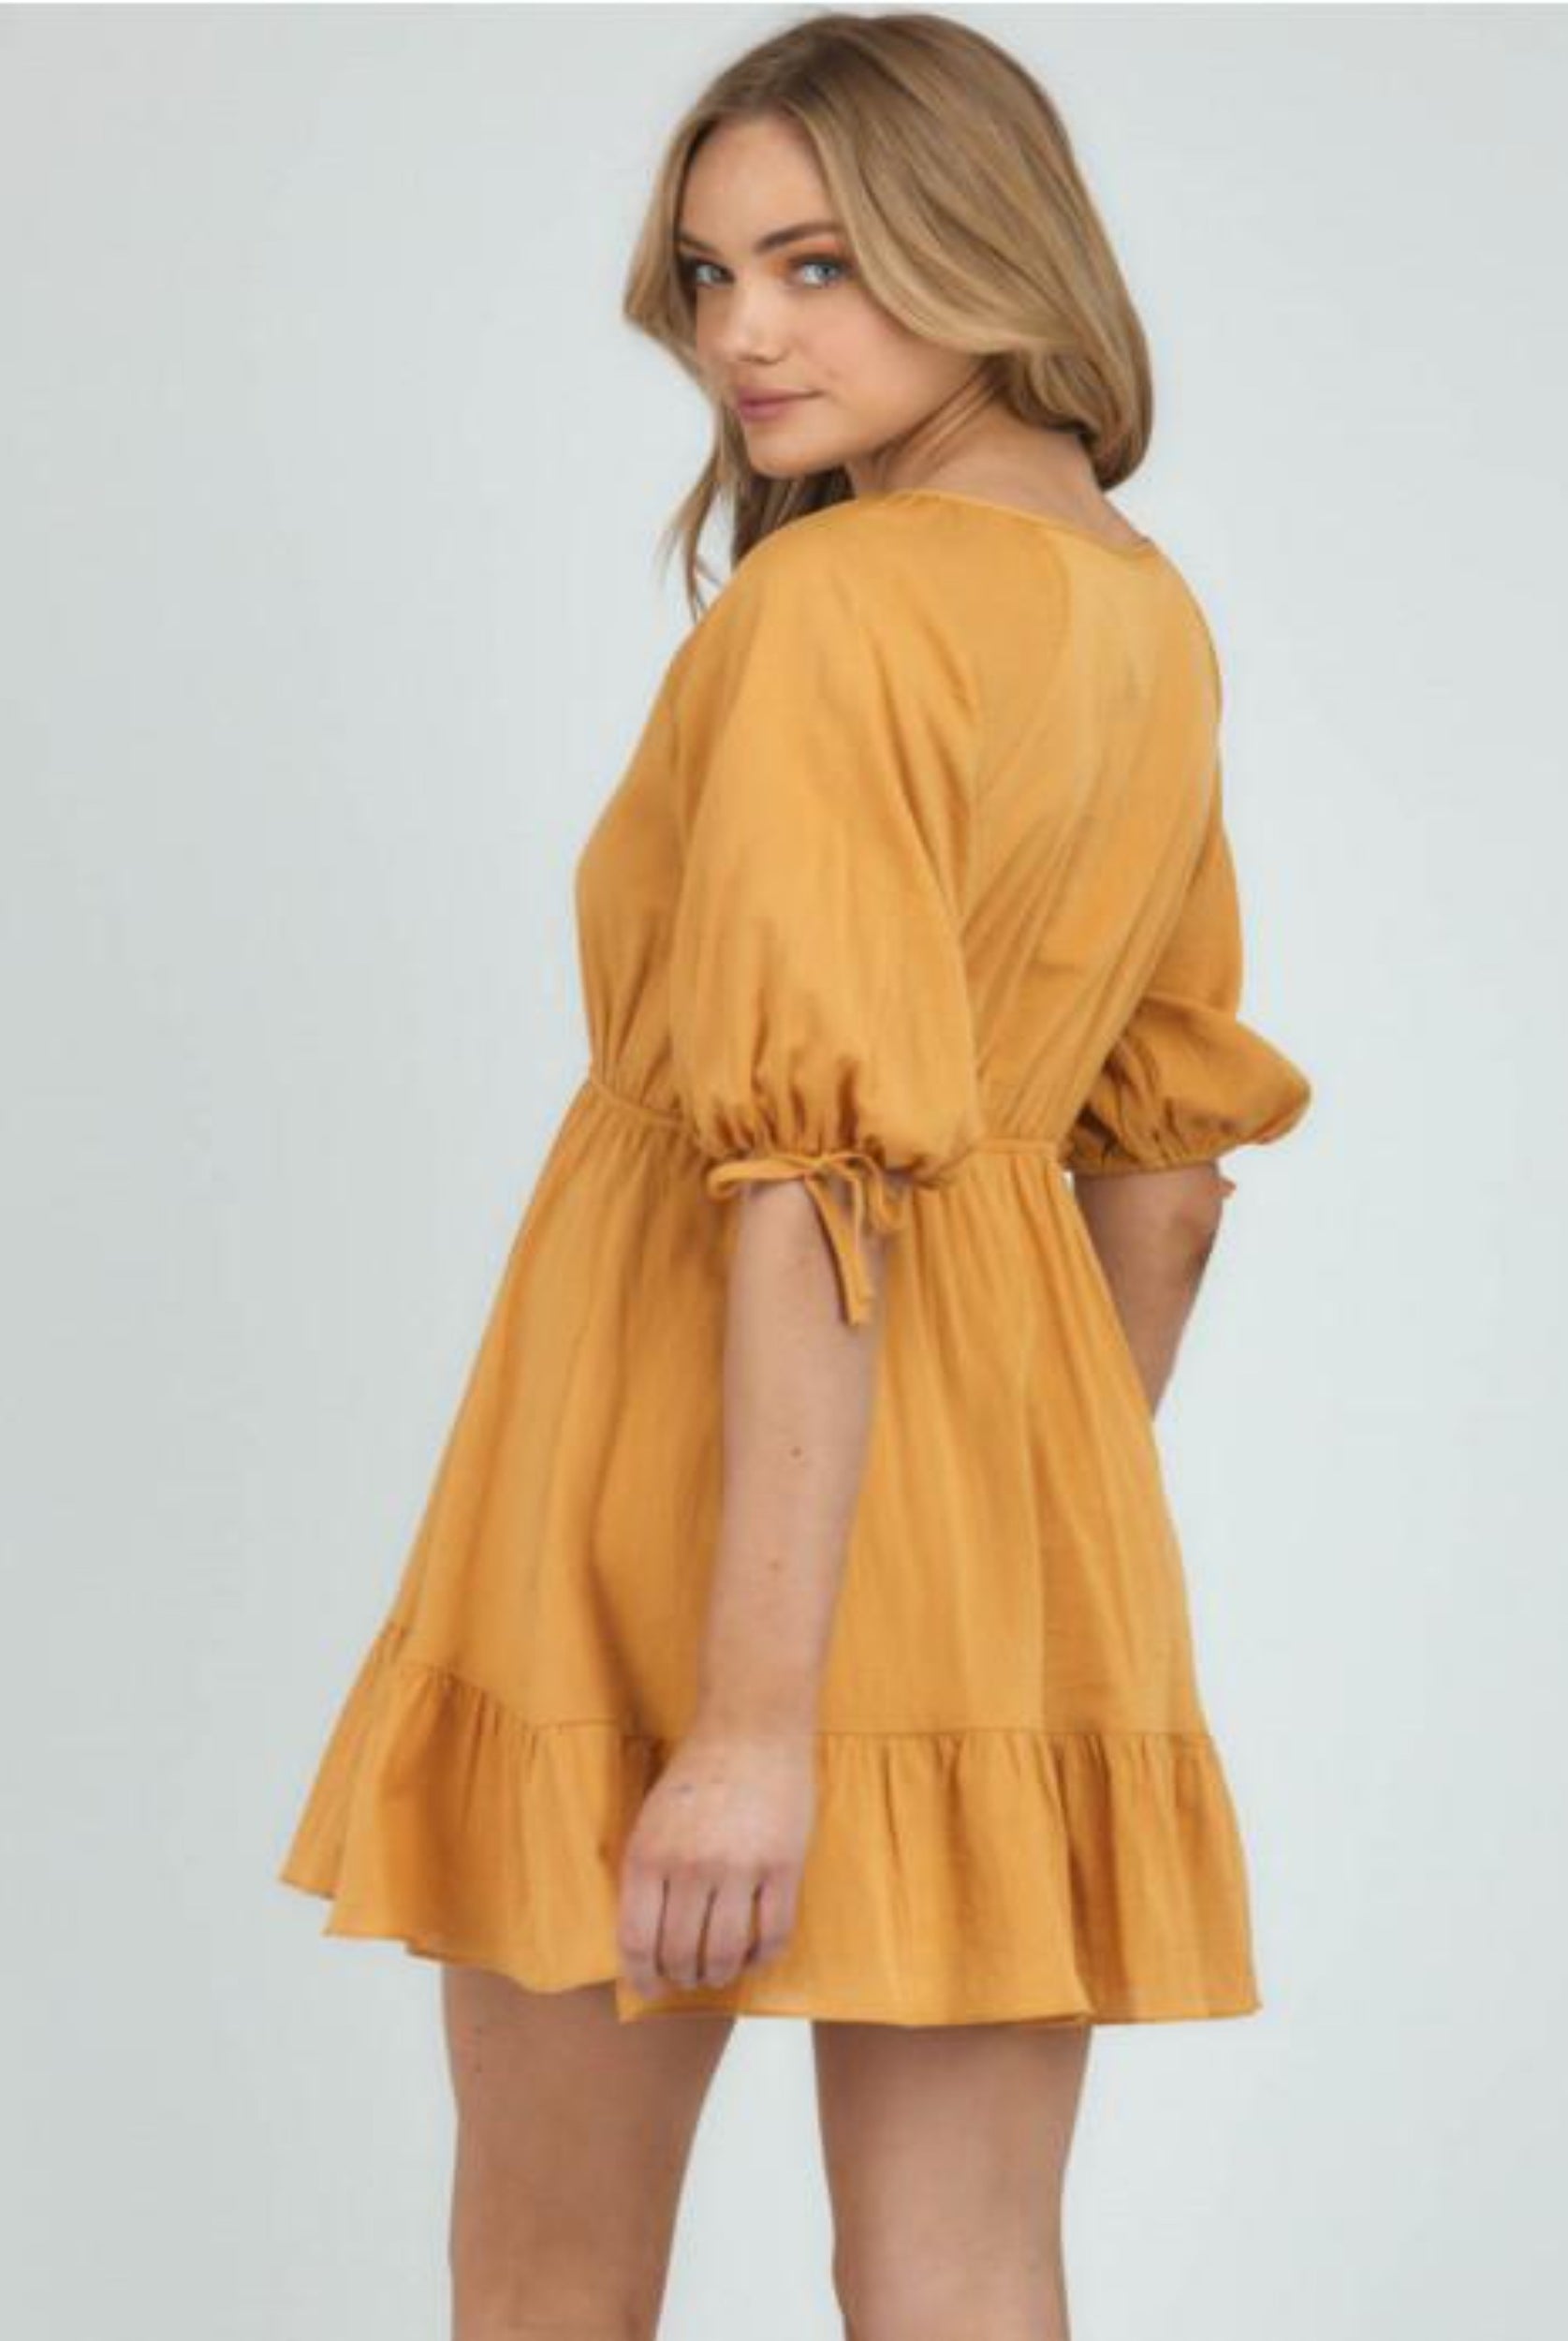 Blonde woman wearing yellow a line dress looking back